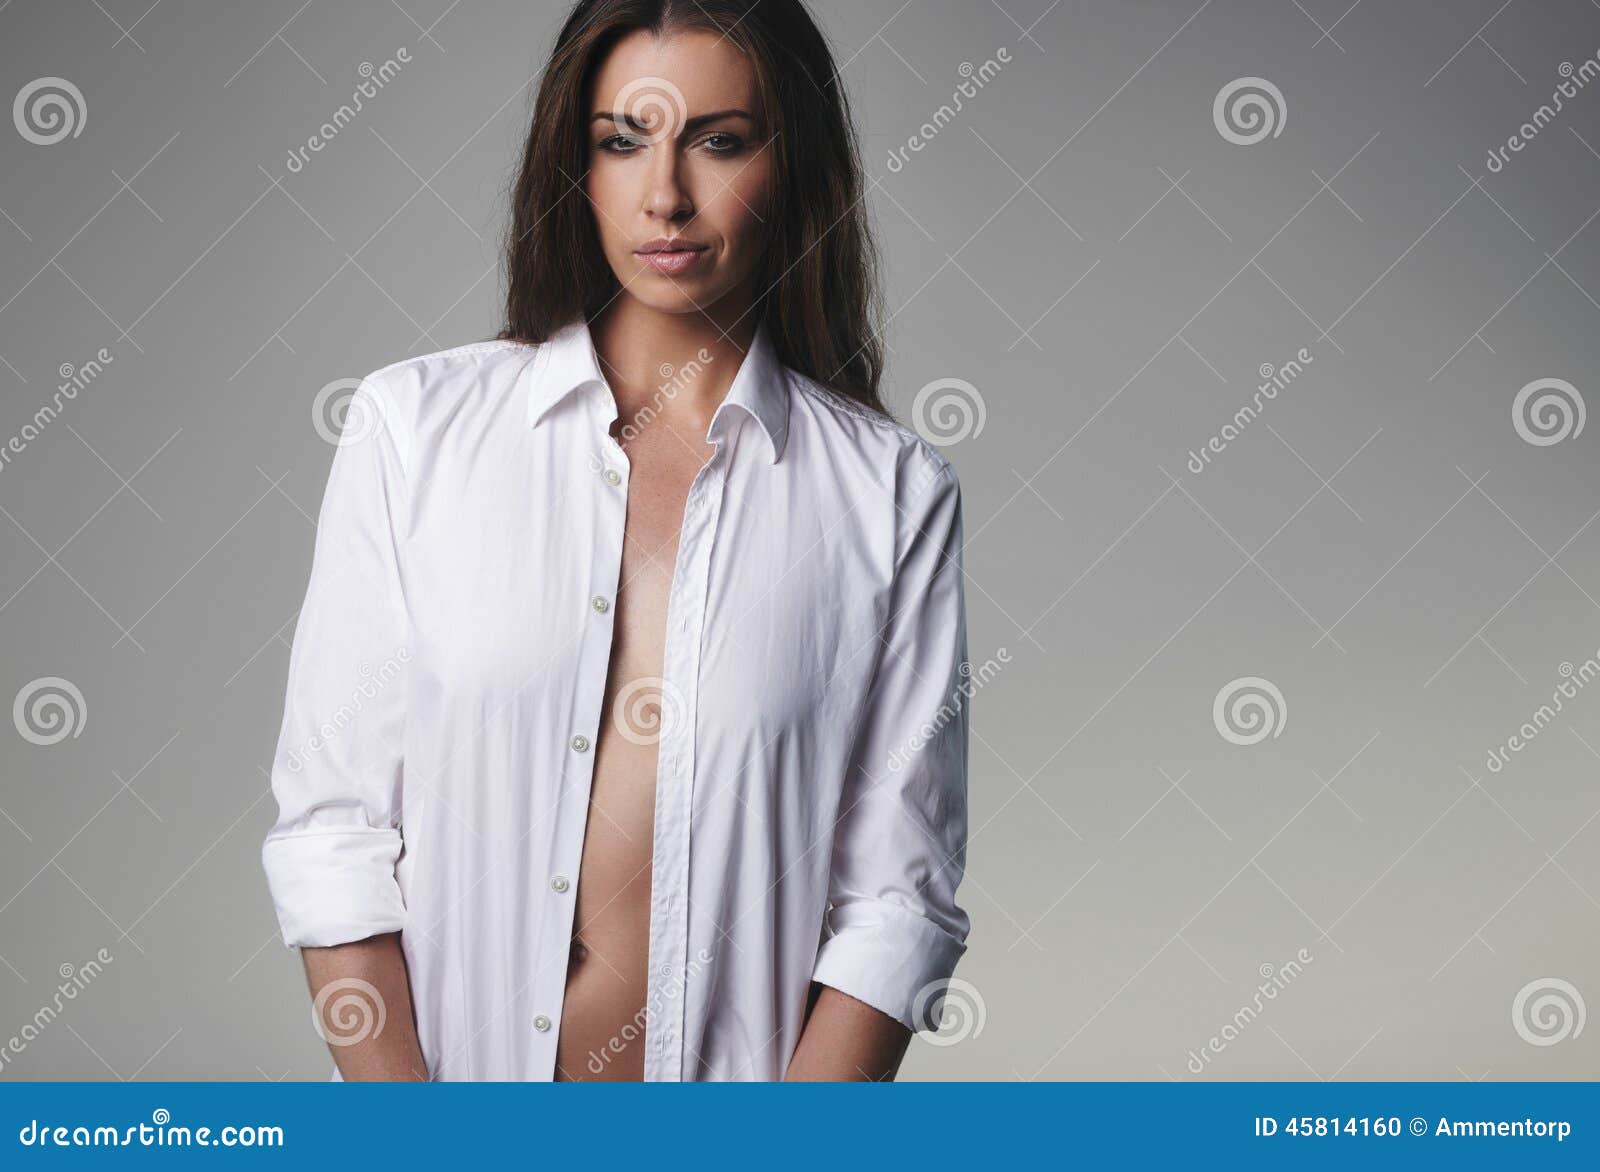 Woman With Unbuttoned Shirt Hot Girl Hd Wallpaper